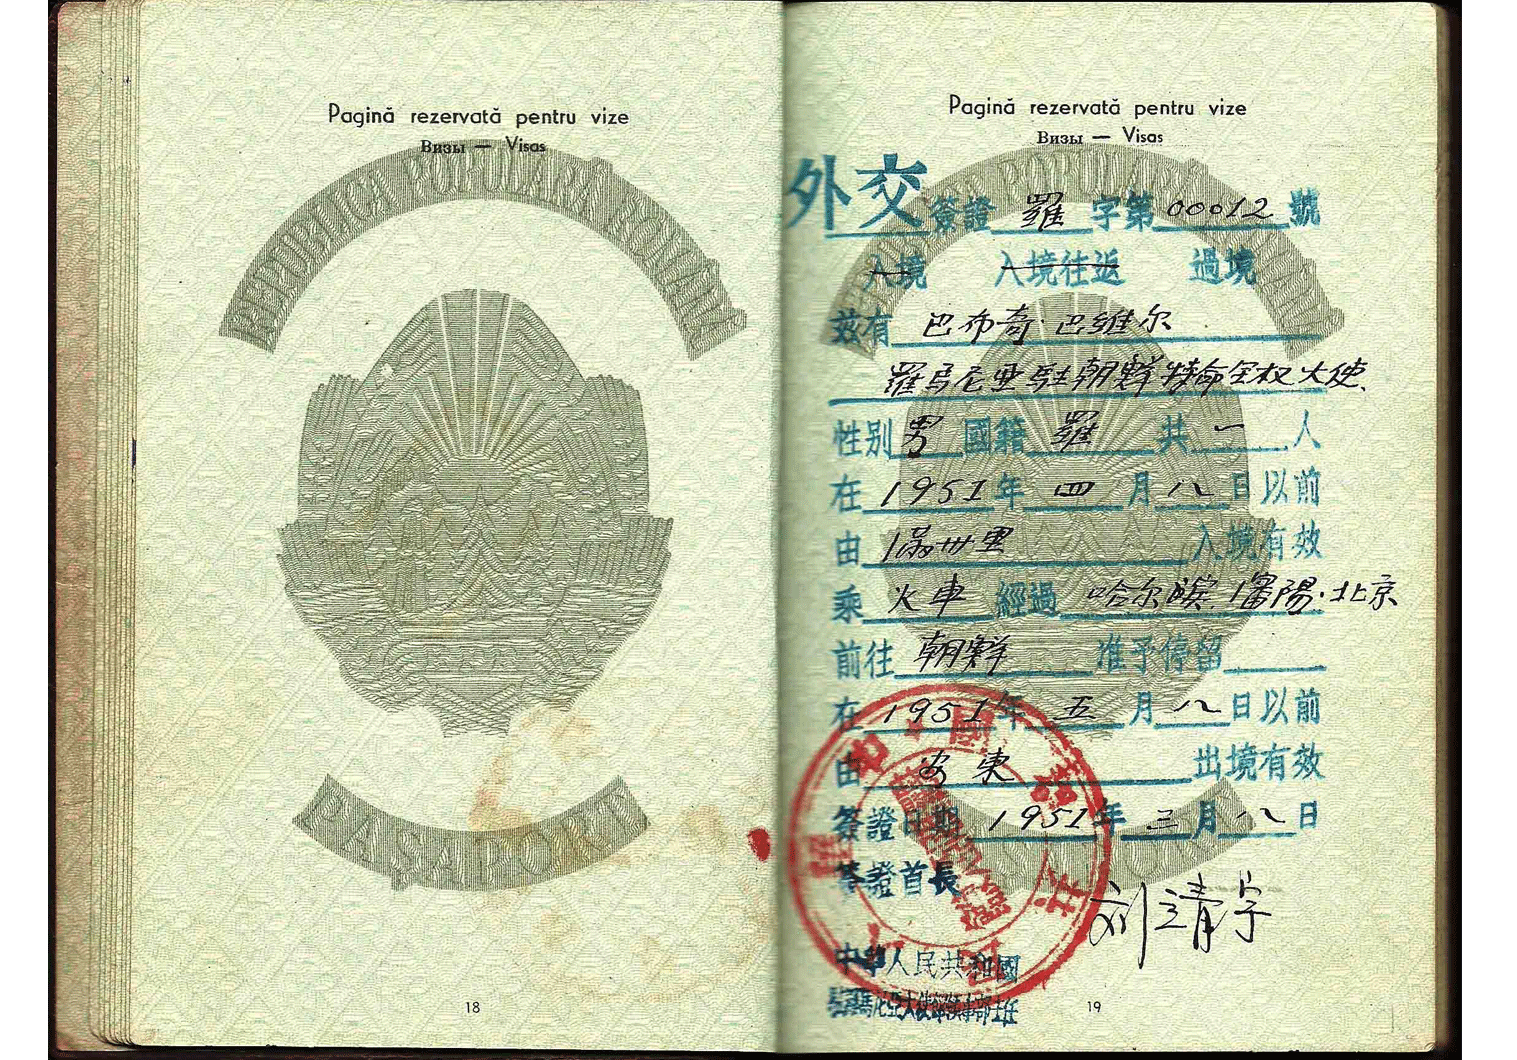 1951 Chinese diplomatic visa inside a passport